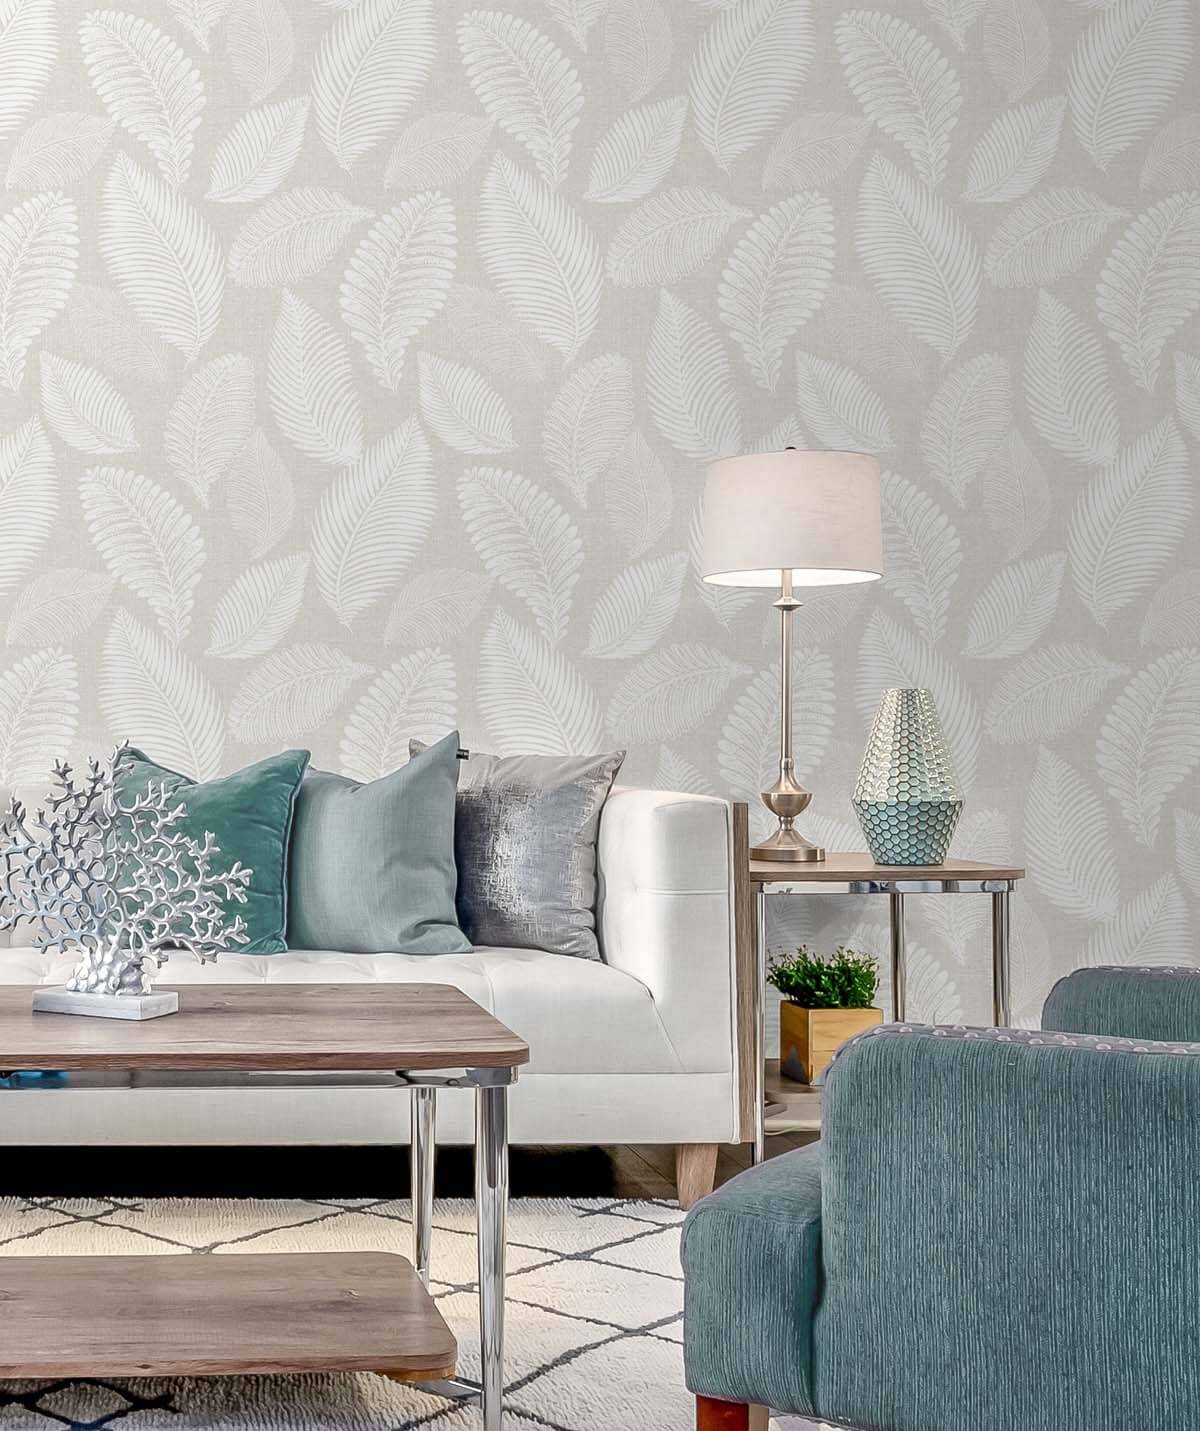 Seabrook White Heron Tossed Leaves Wallpaper - Cool Linen